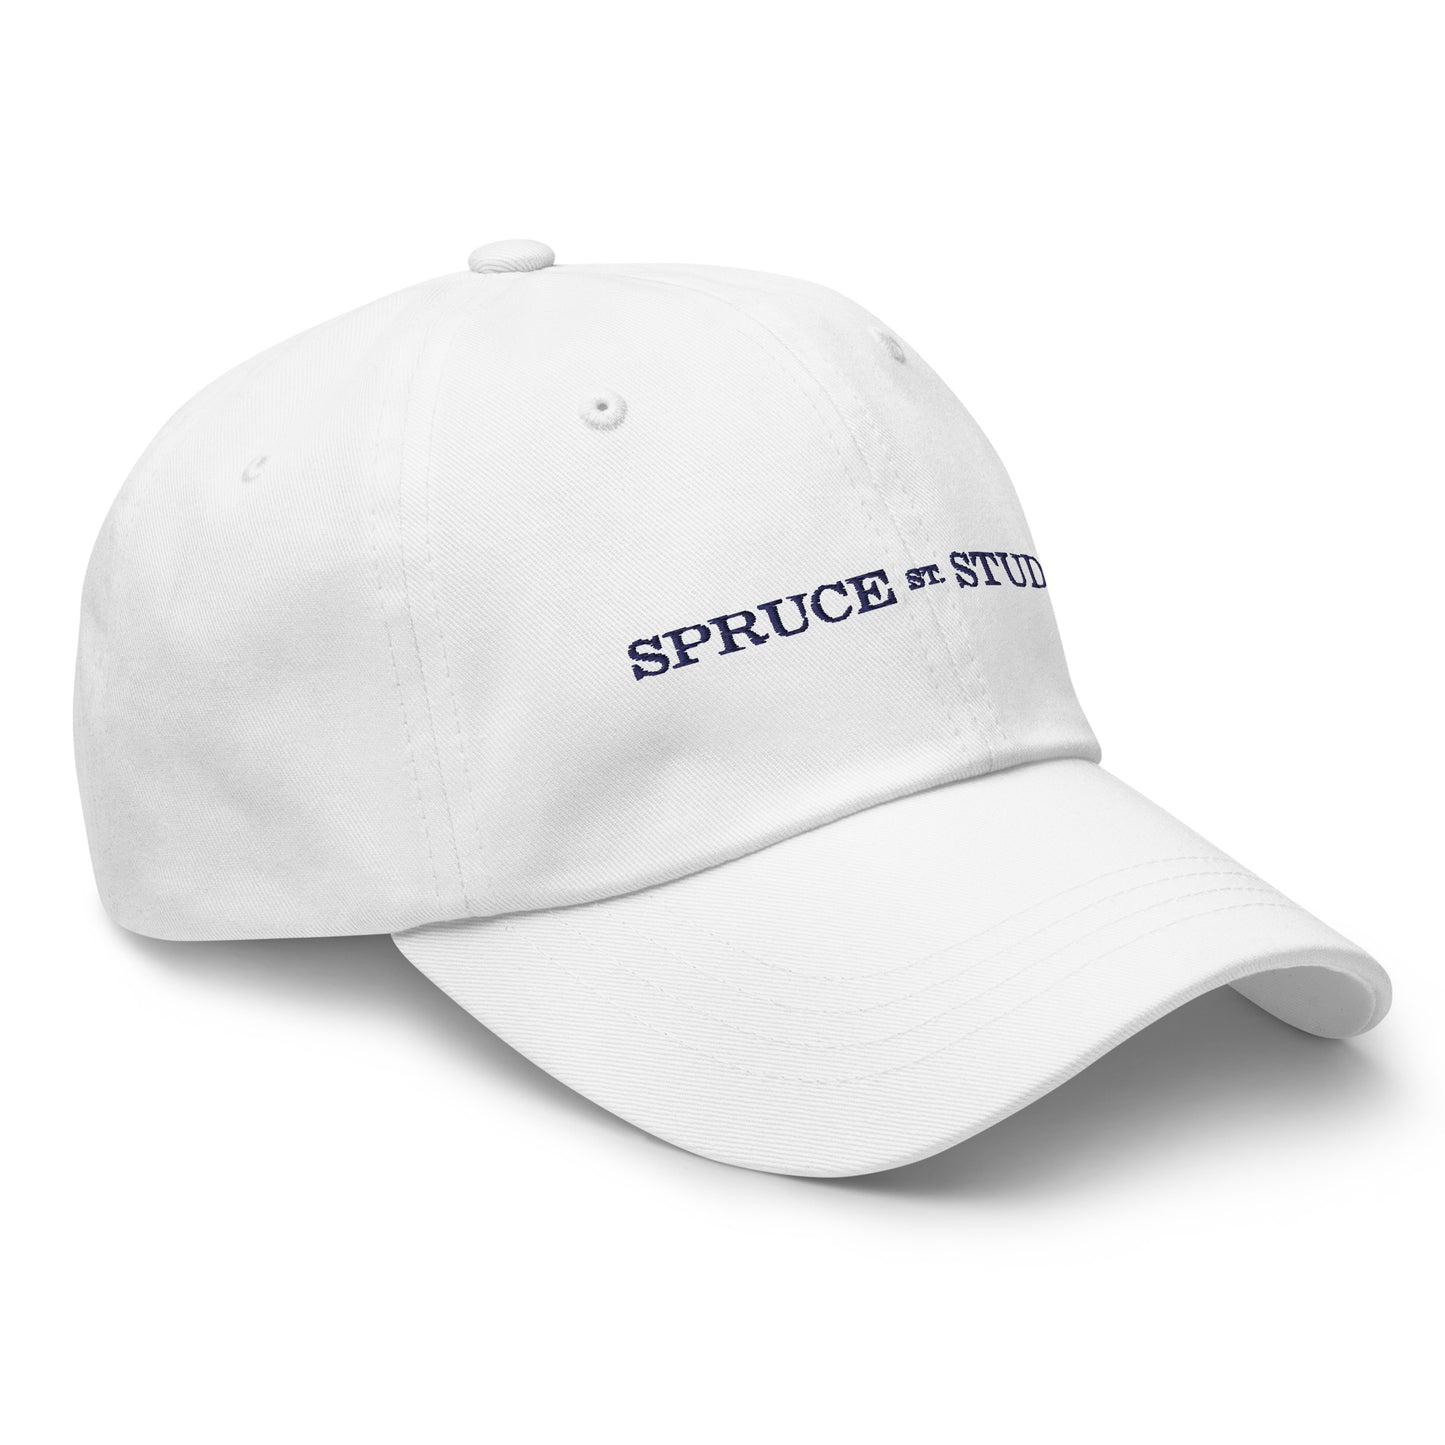 Spruce Street Studio Hat